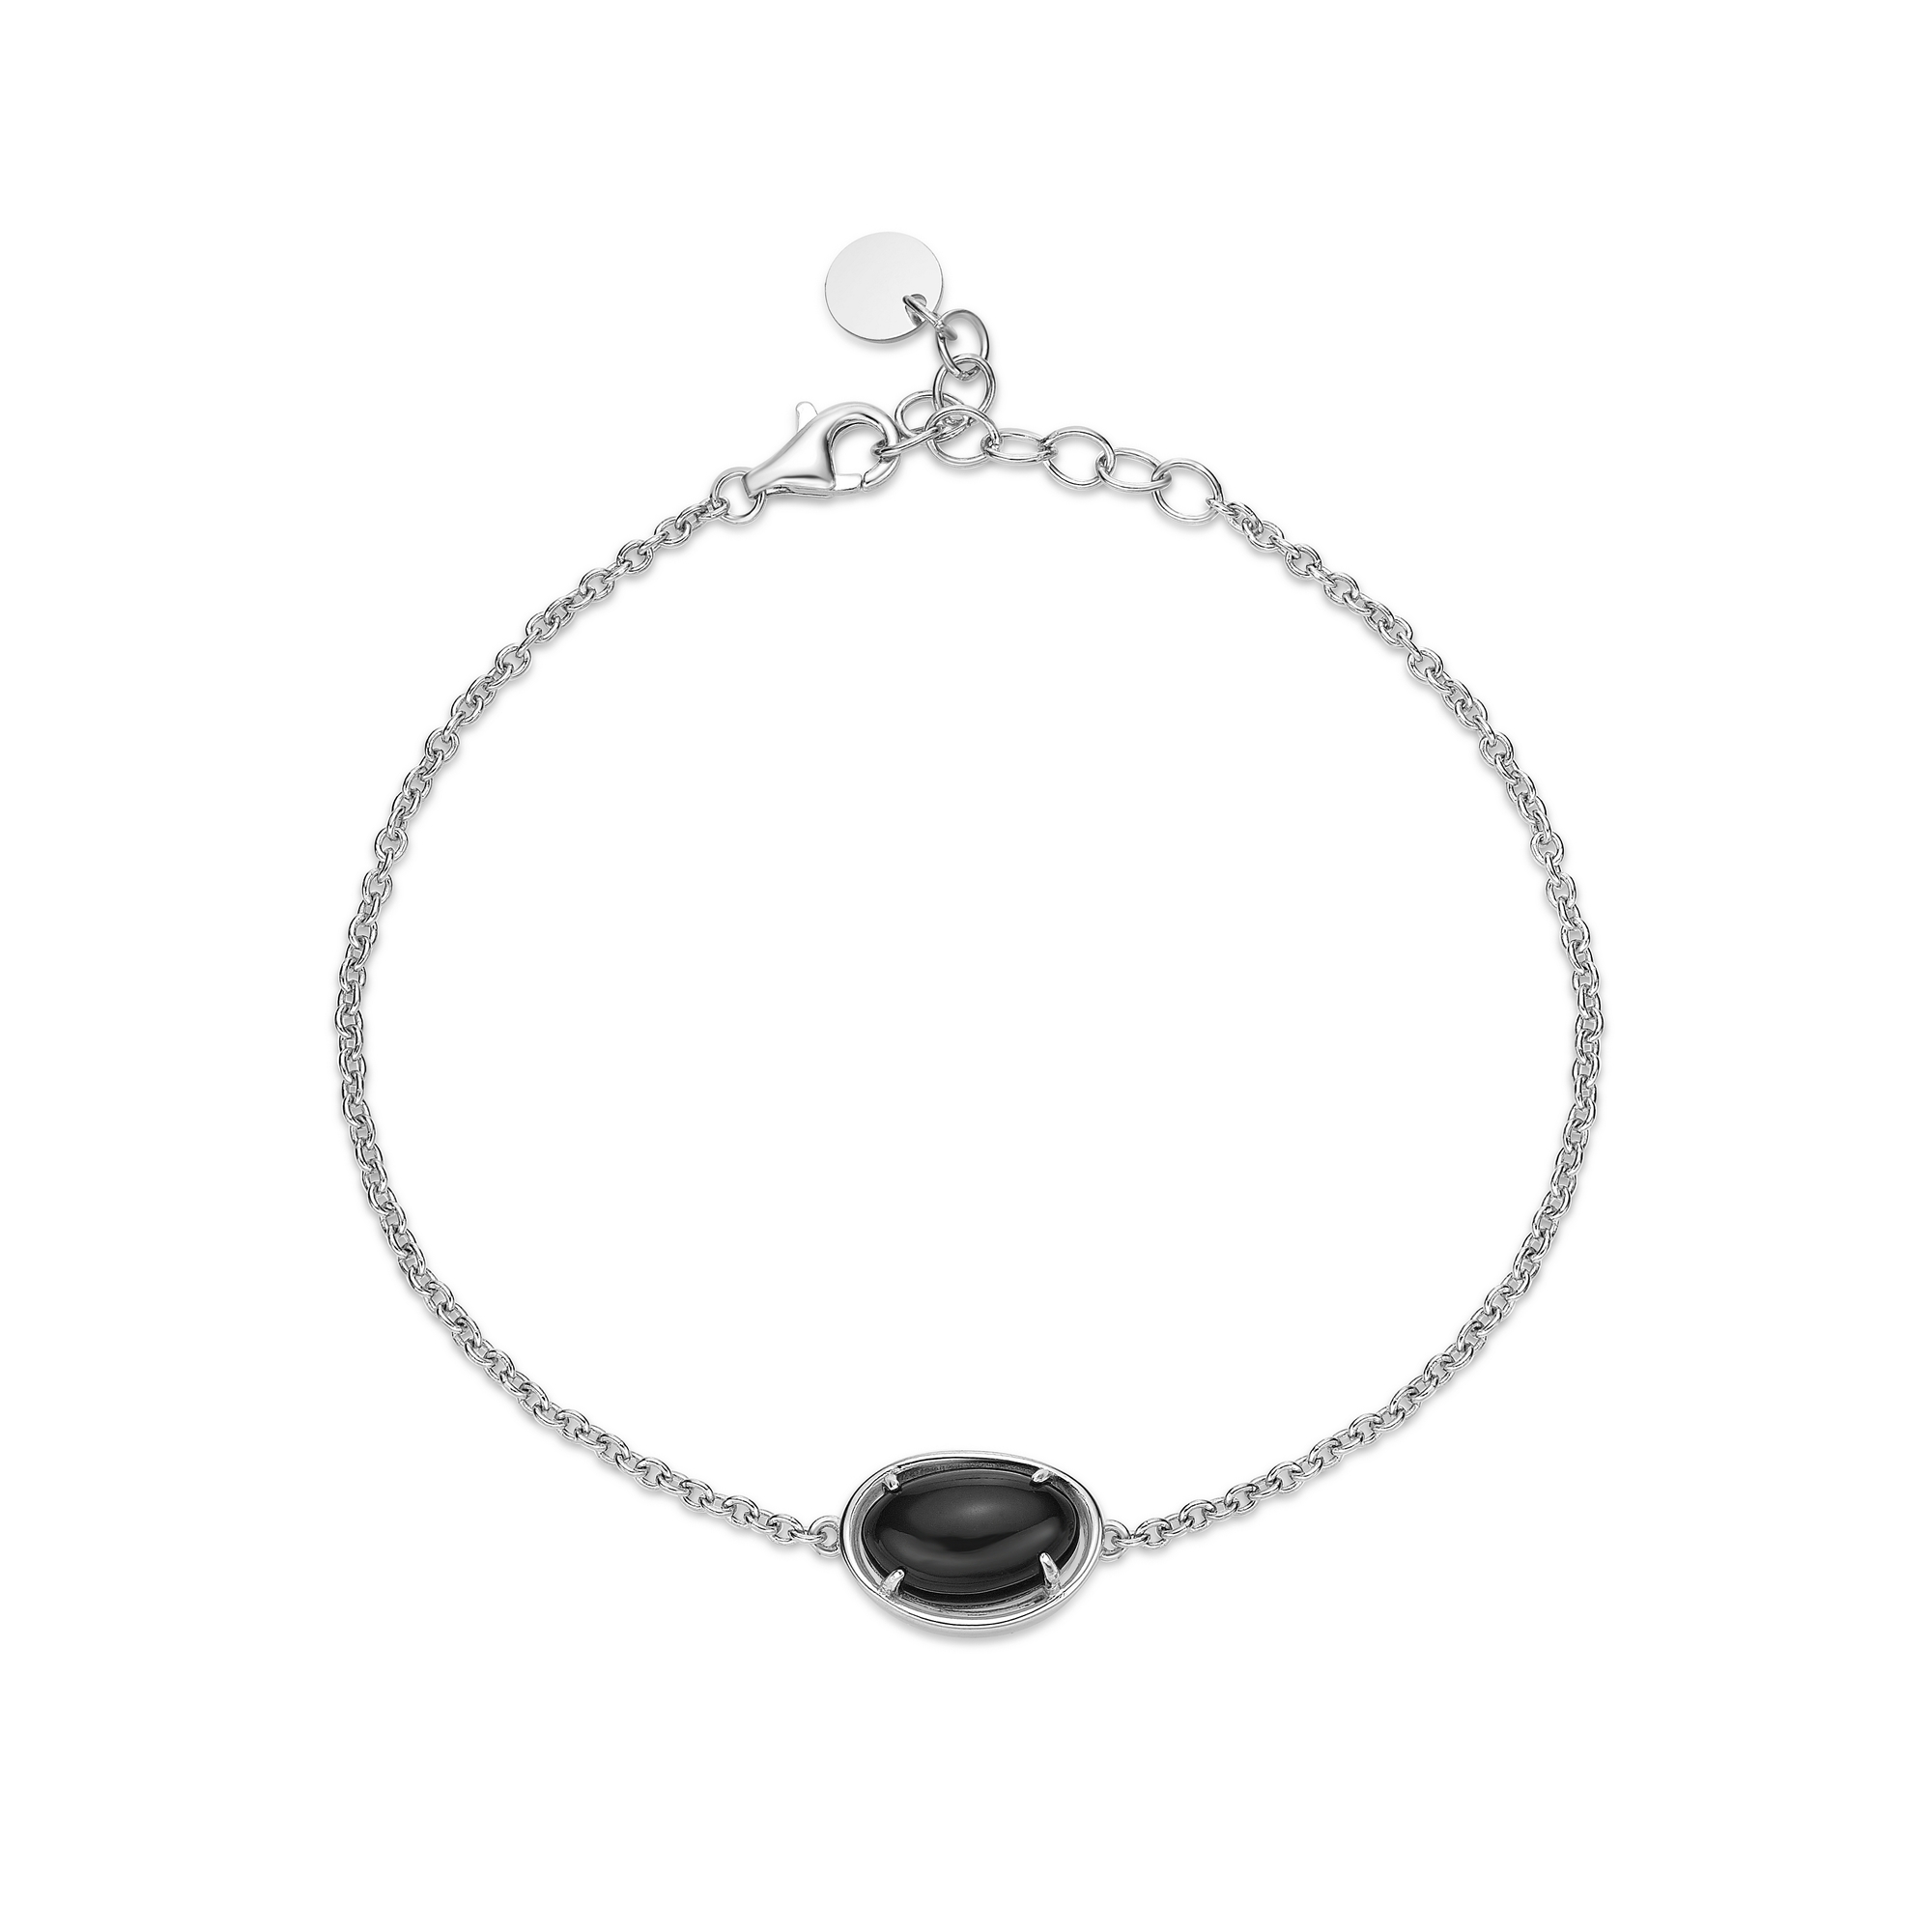 Lavari Jewelers Women's Sterling Silver Black Onyx Oval Charm Bracelet with Cubic Zirconia, 8"